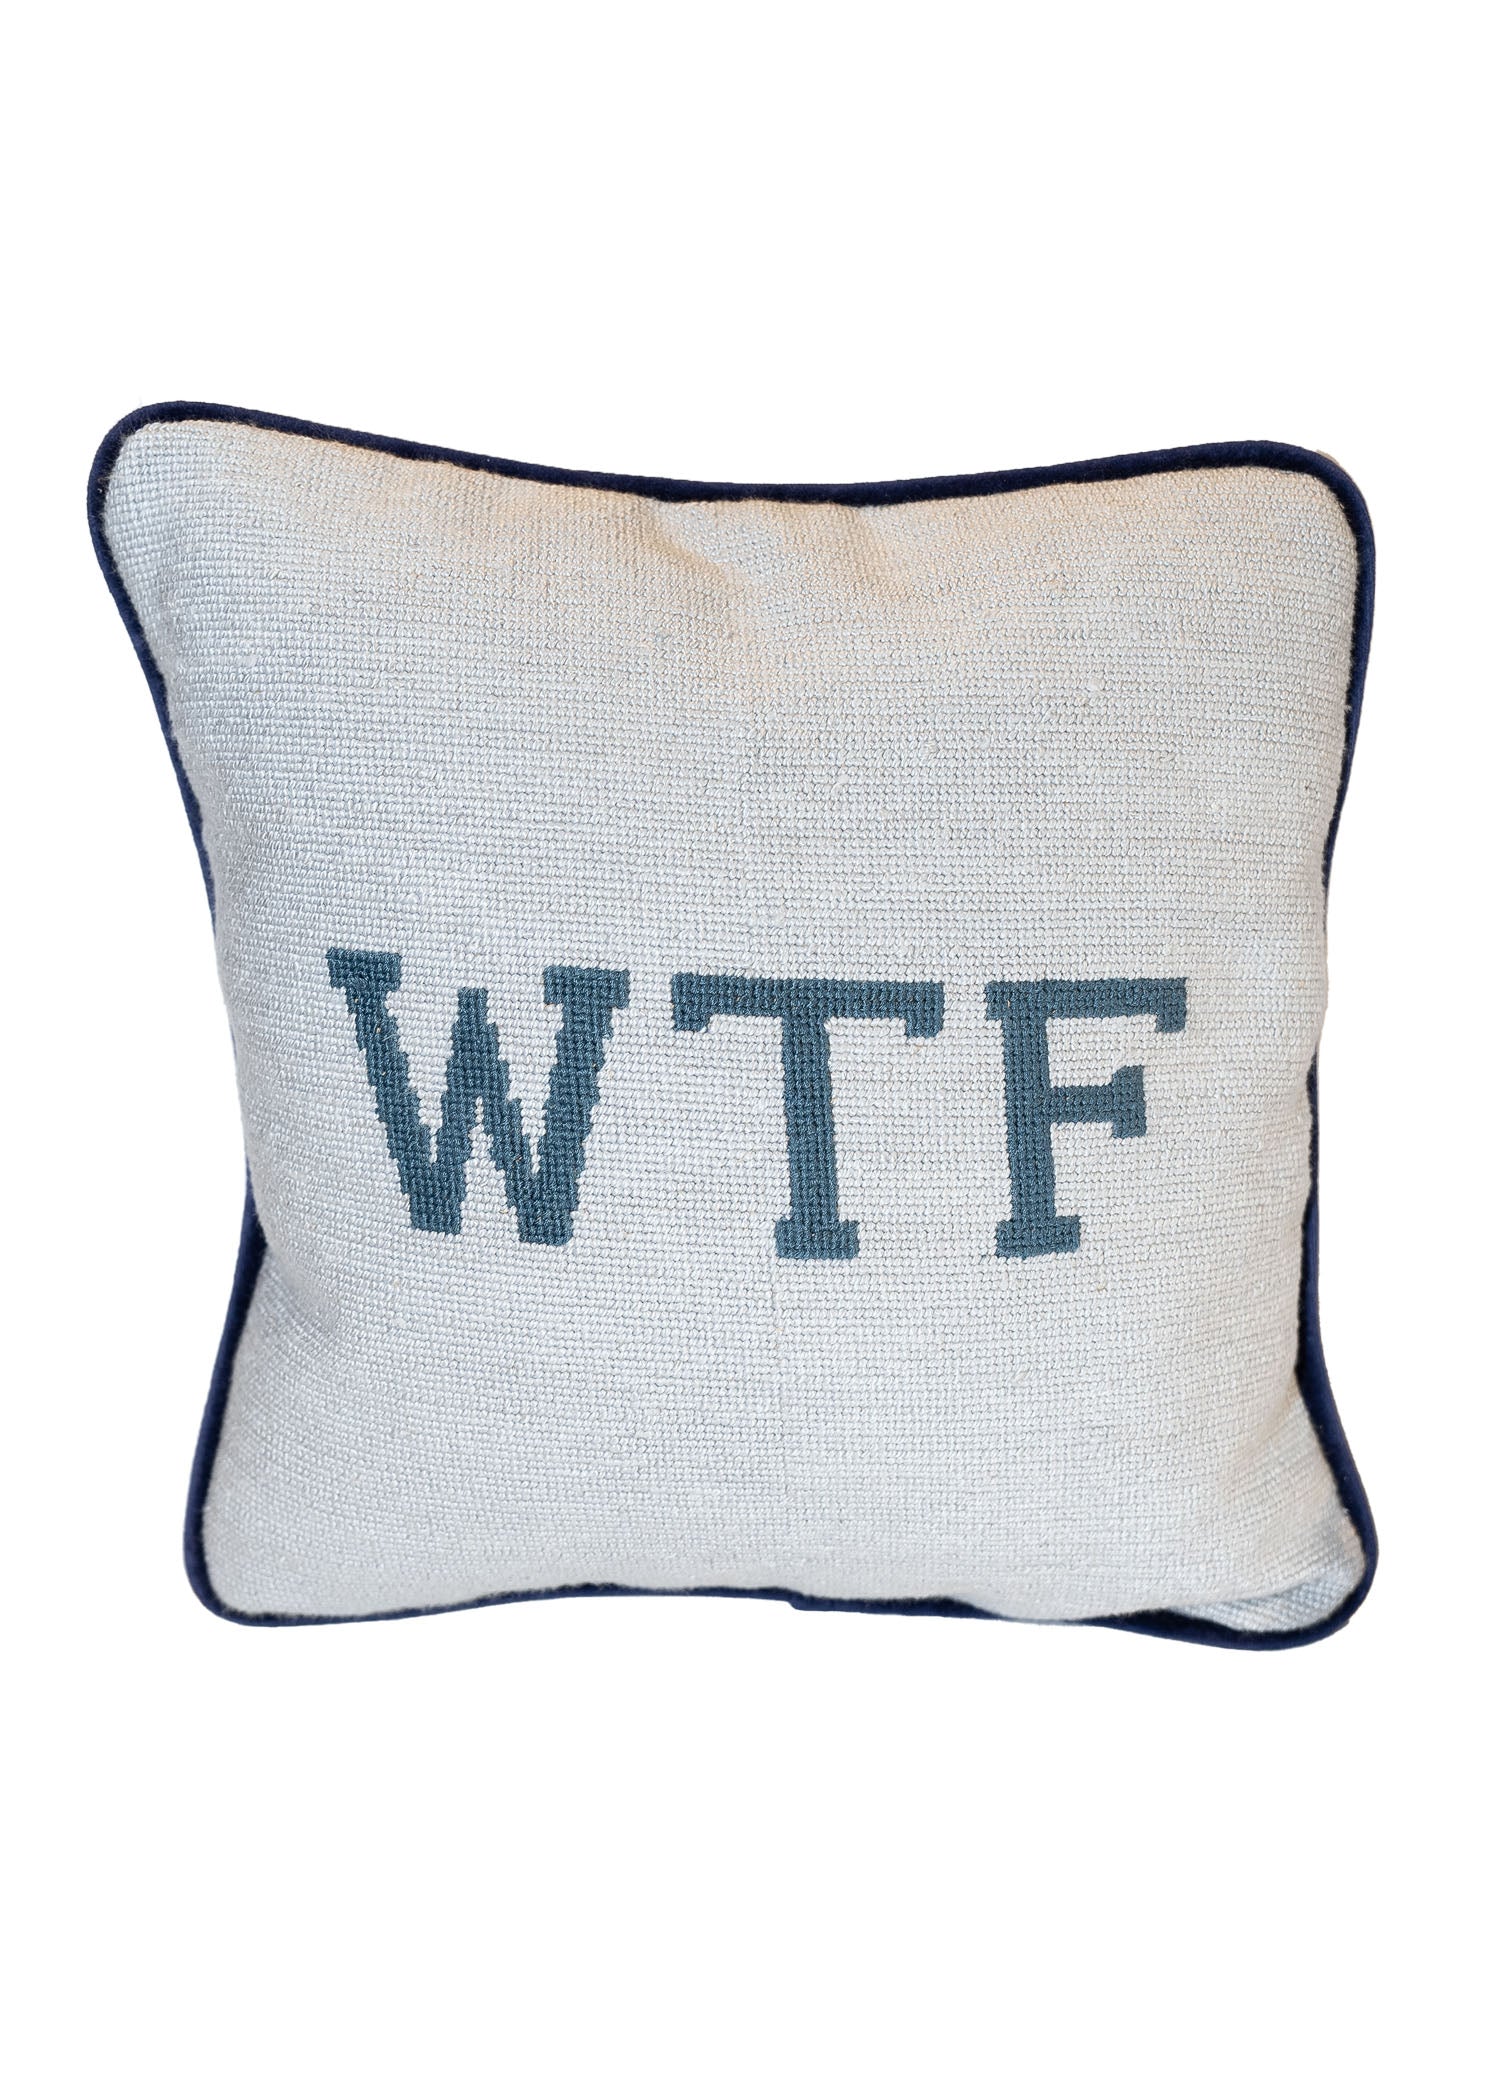 Needlepoint WTF Pillow